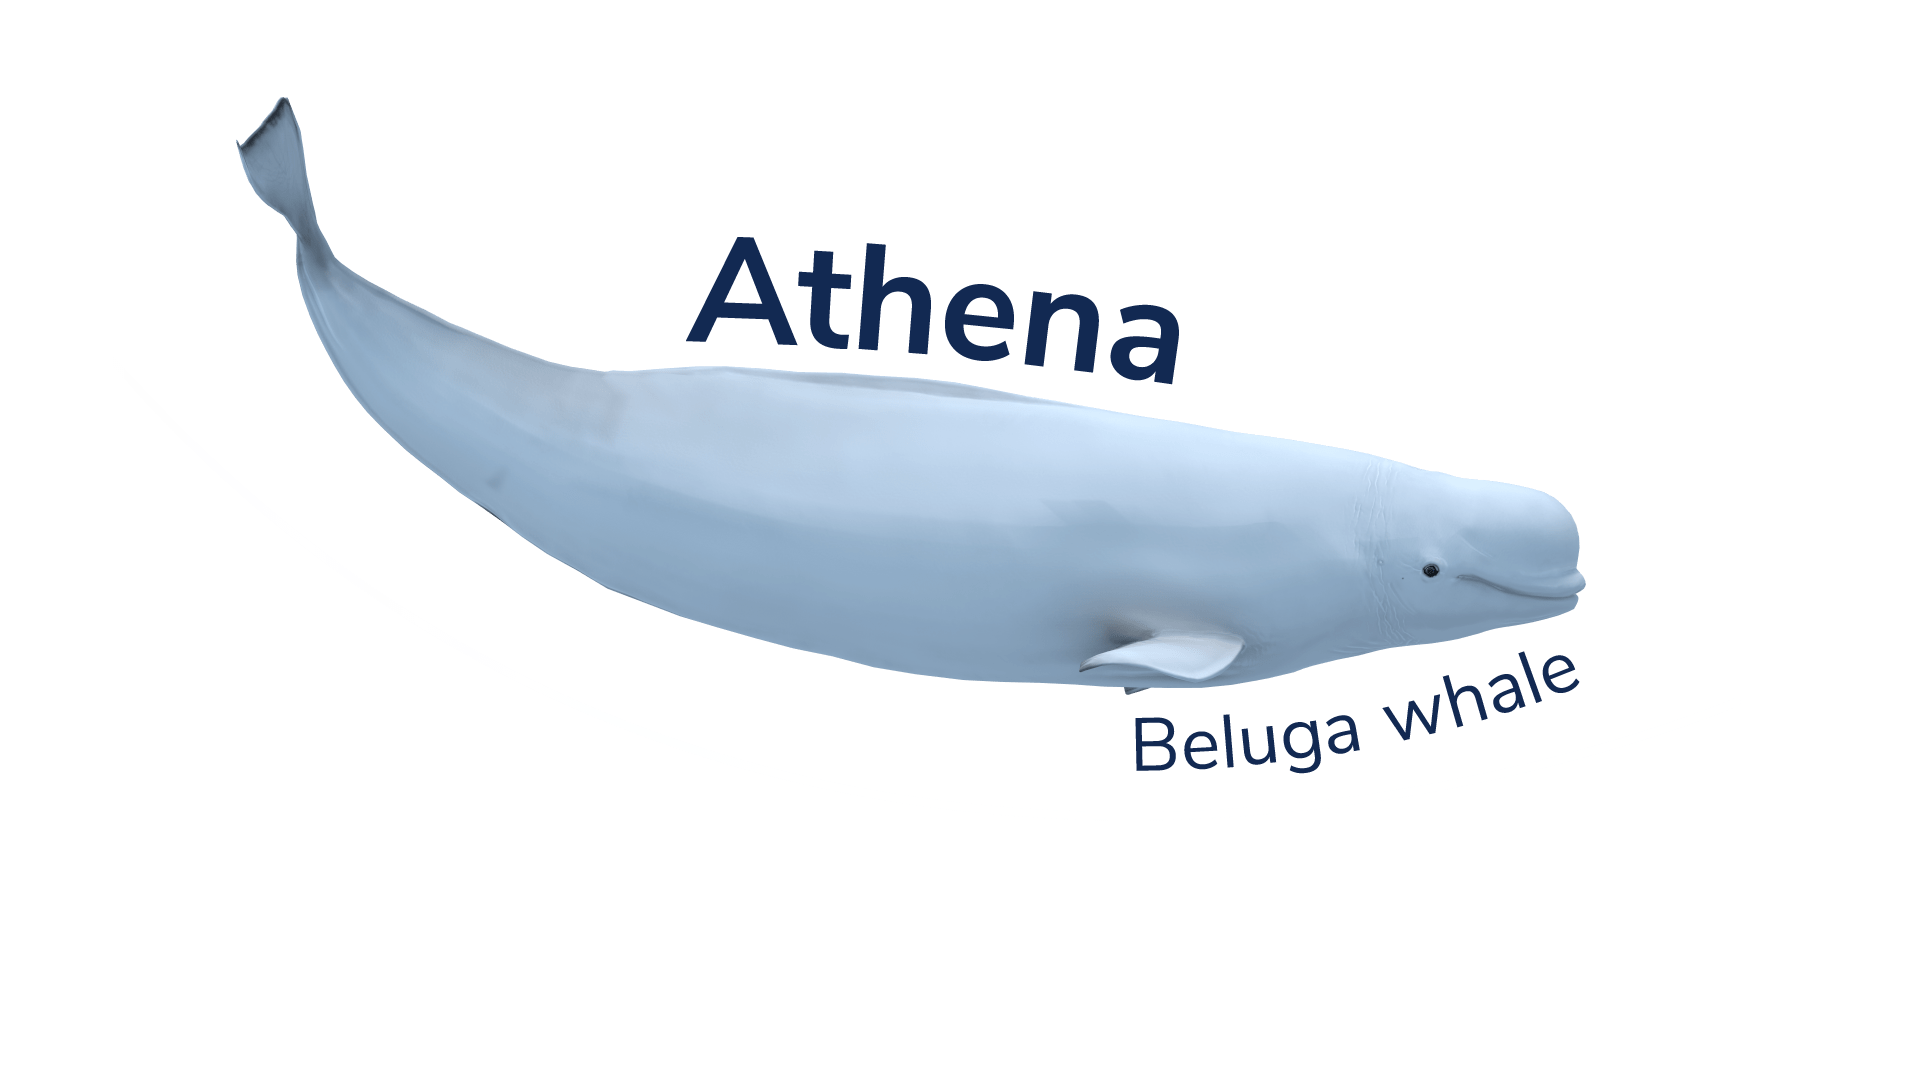 The beluga whale Athena